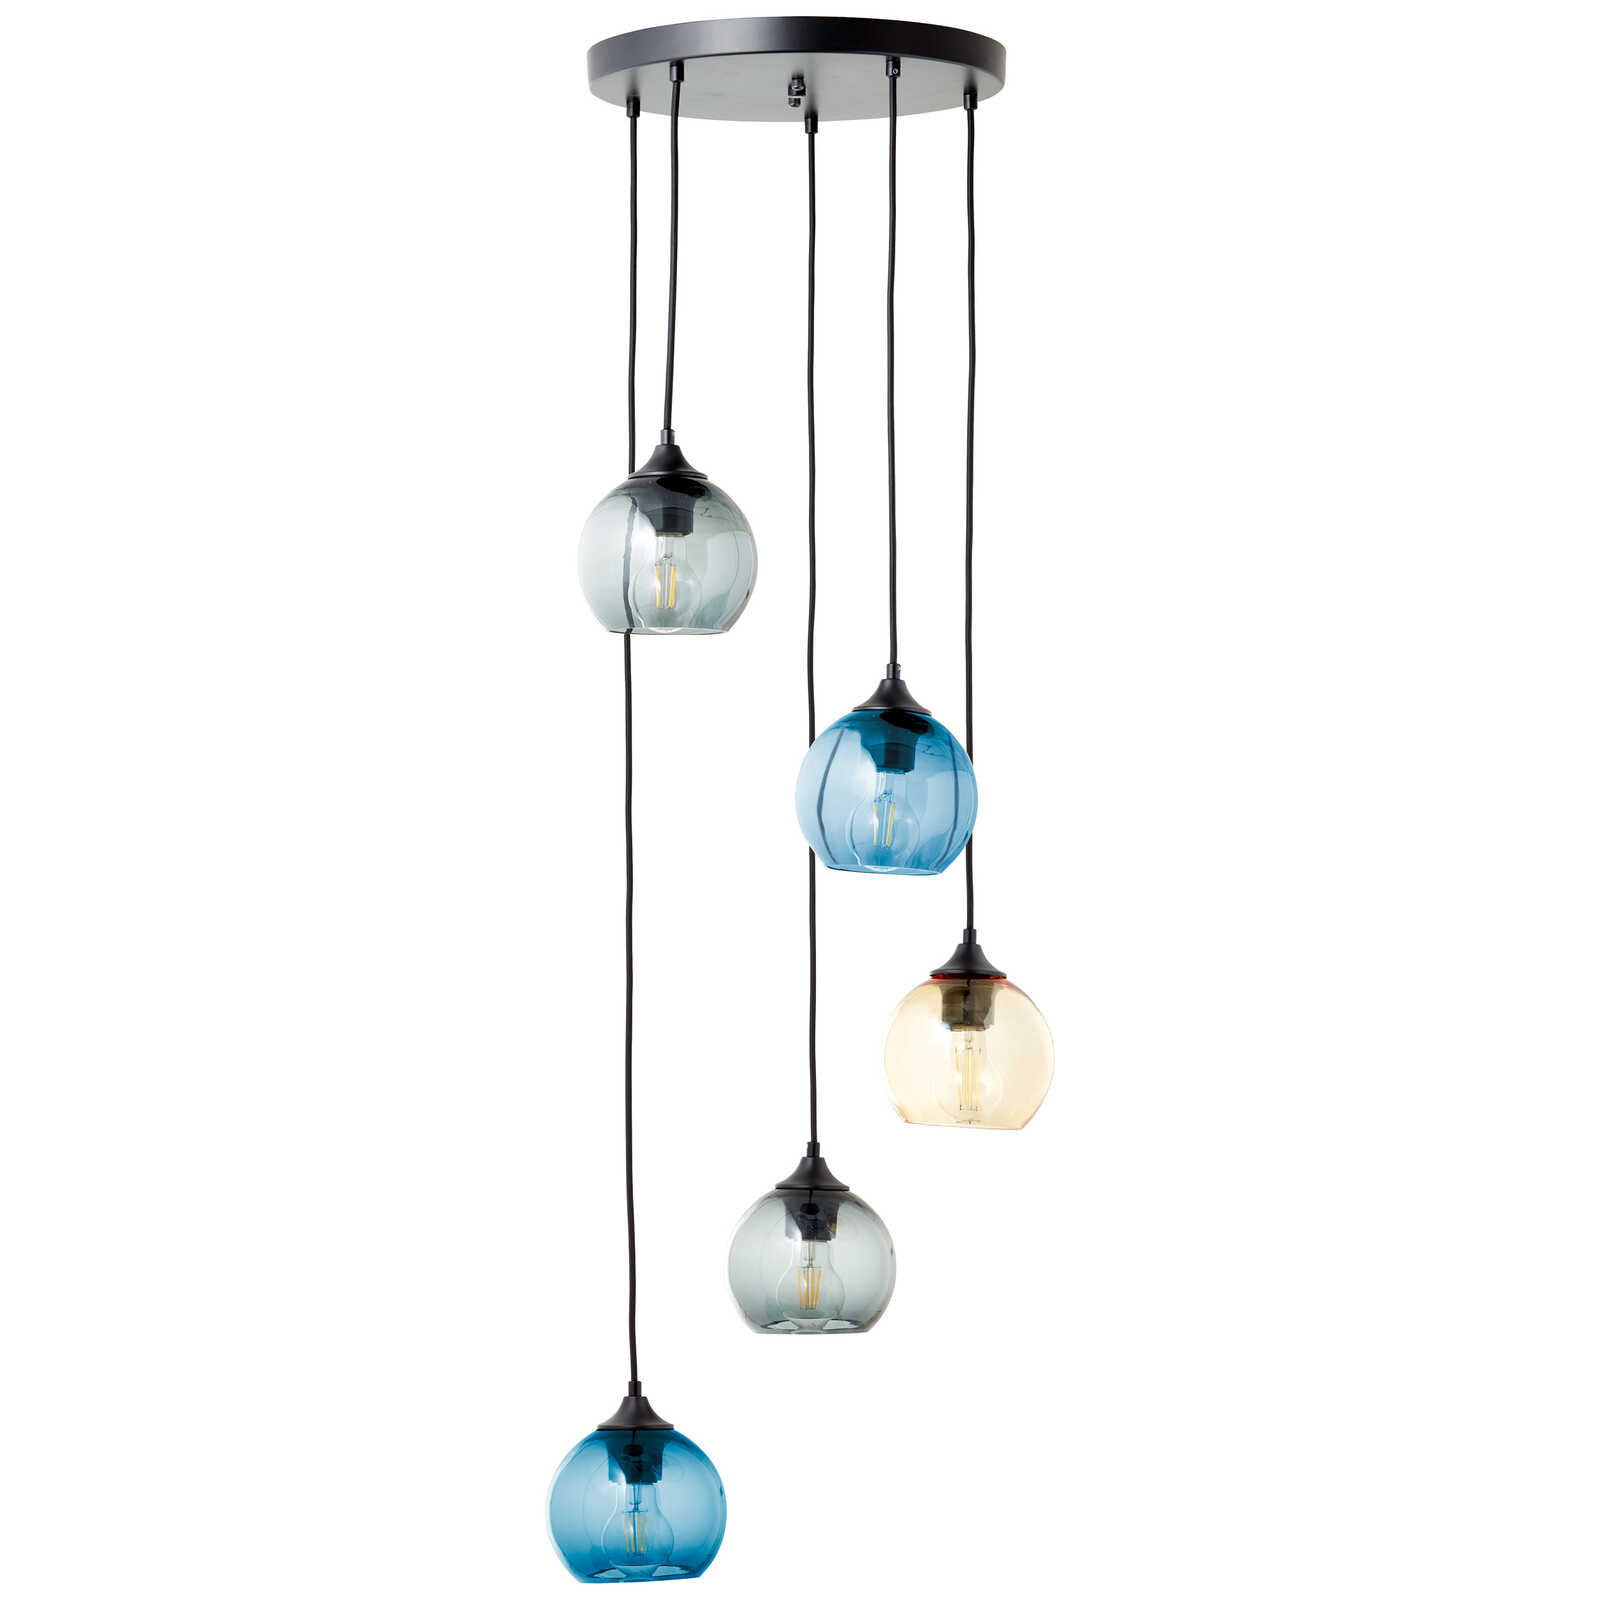             Glazen hanglamp - Alexandra - Bont
        